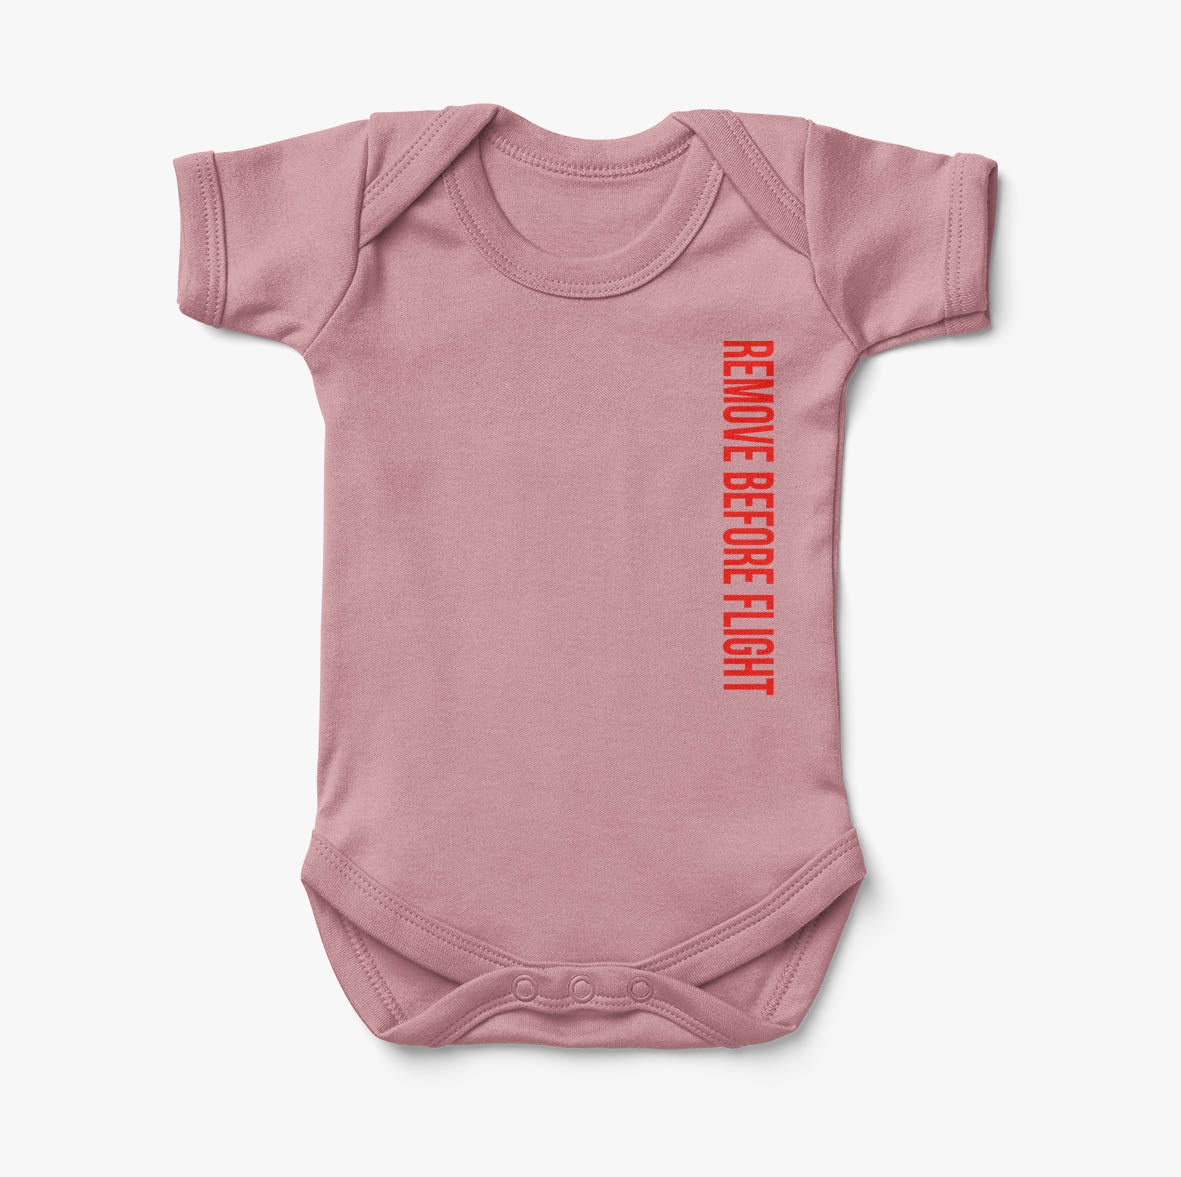 Remove Before Flight 2 Designed Baby Bodysuits